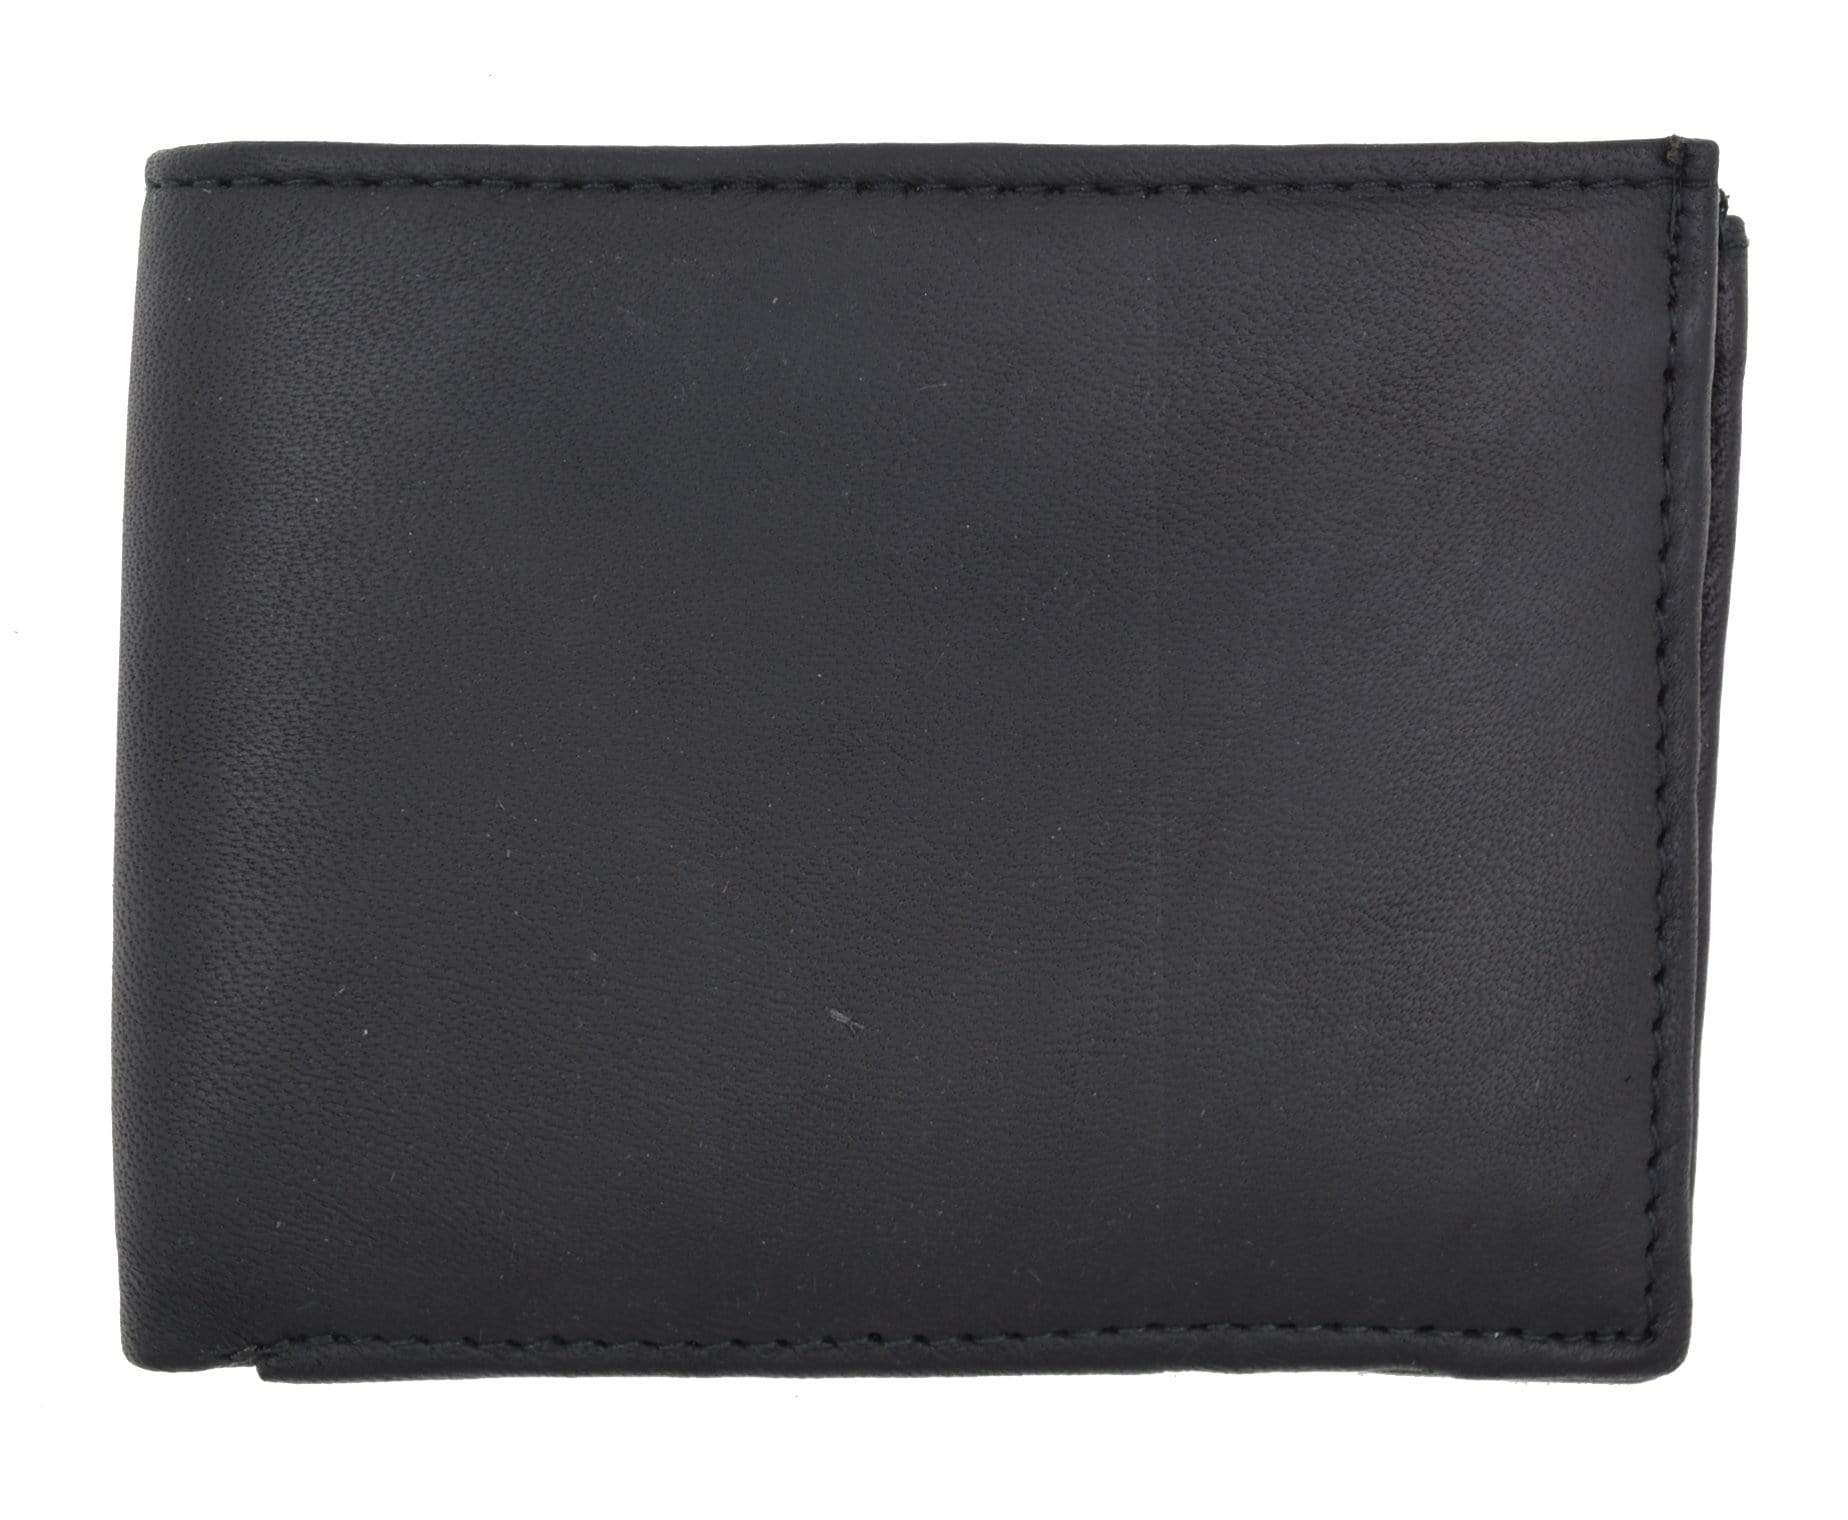 Bal Manent Men's Genuine Leather Short Wallet With Id Window Money